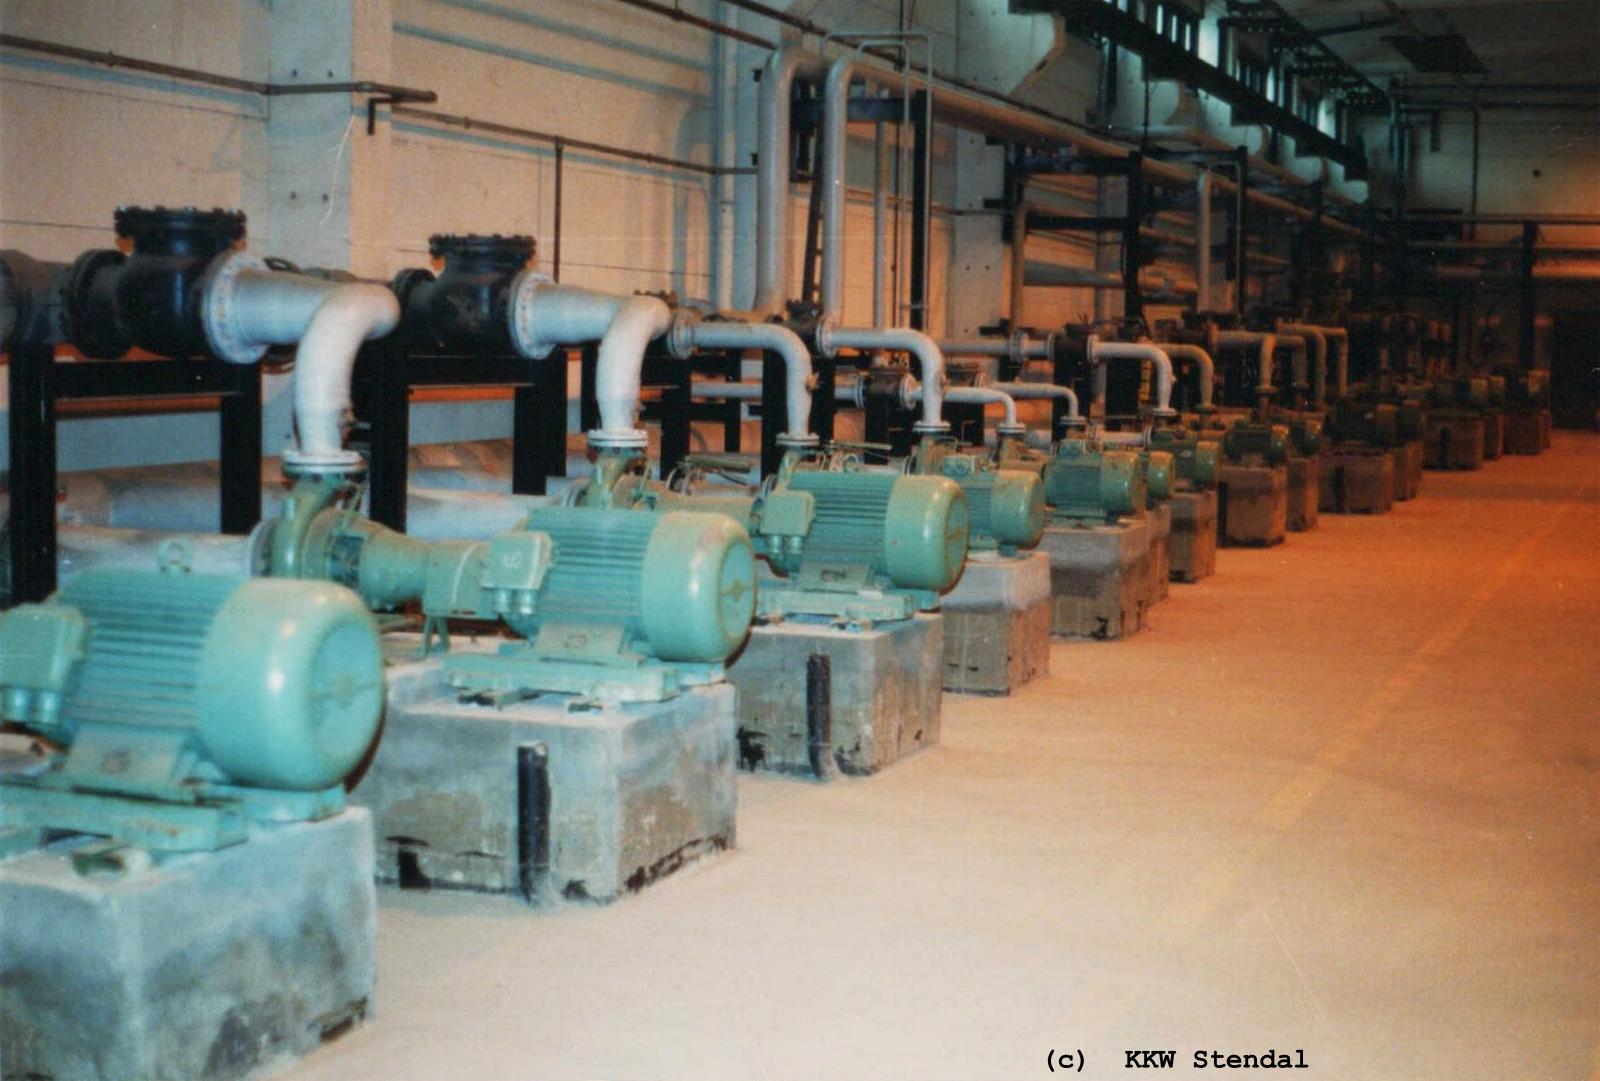  KKW Stendal, Baustelle 1990,Pumpenhalle Vollentsalzung  